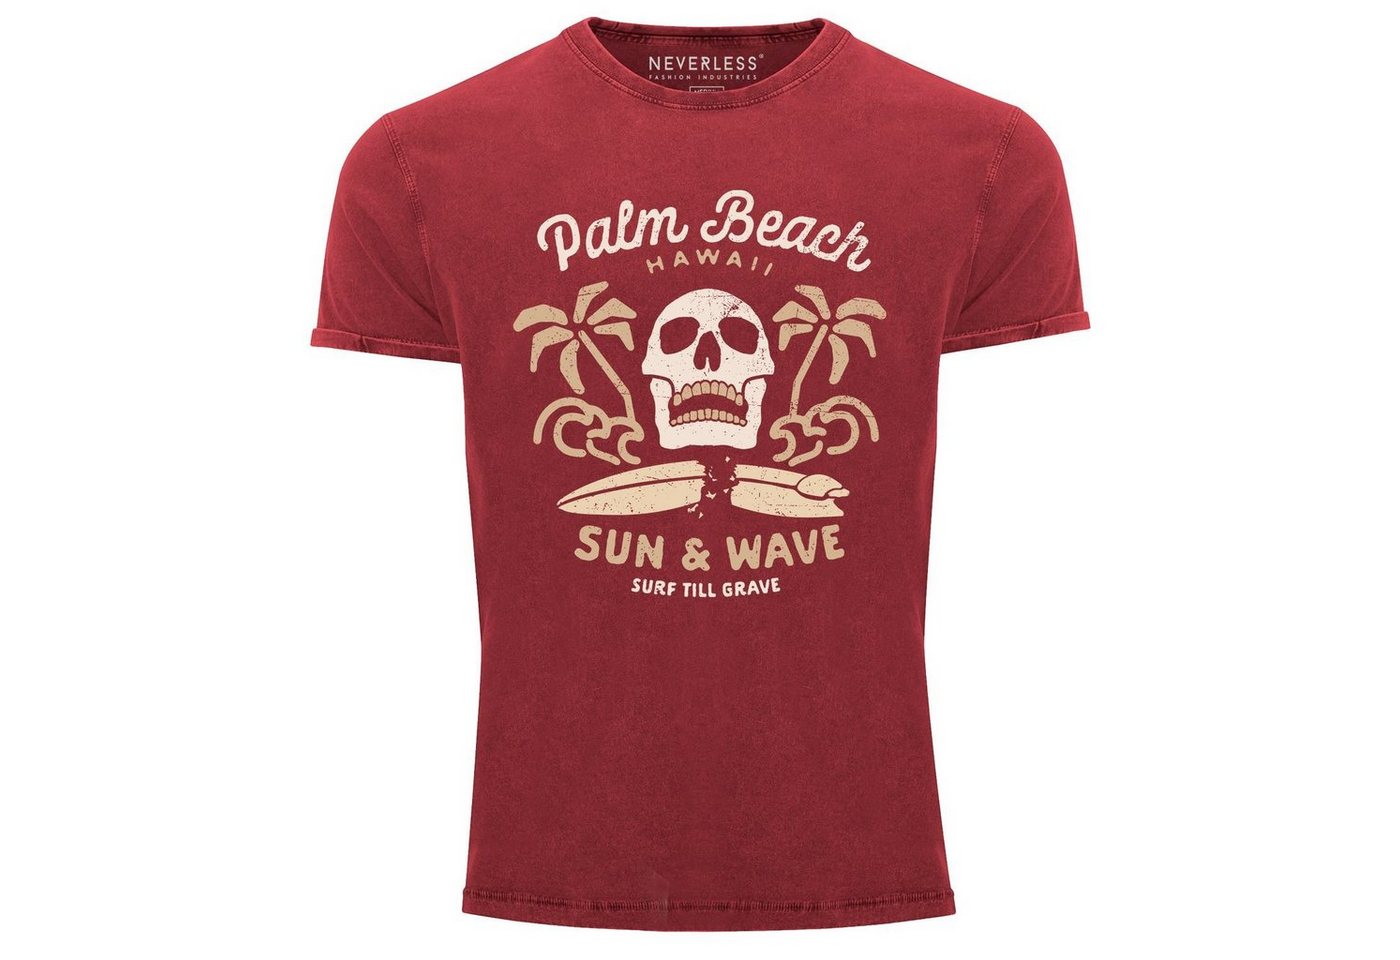 Neverless Print-Shirt Neverless® Herren T-Shirt Surf-Motiv Totenkopf Palm Beach Vintage Shirt mit Print von Neverless